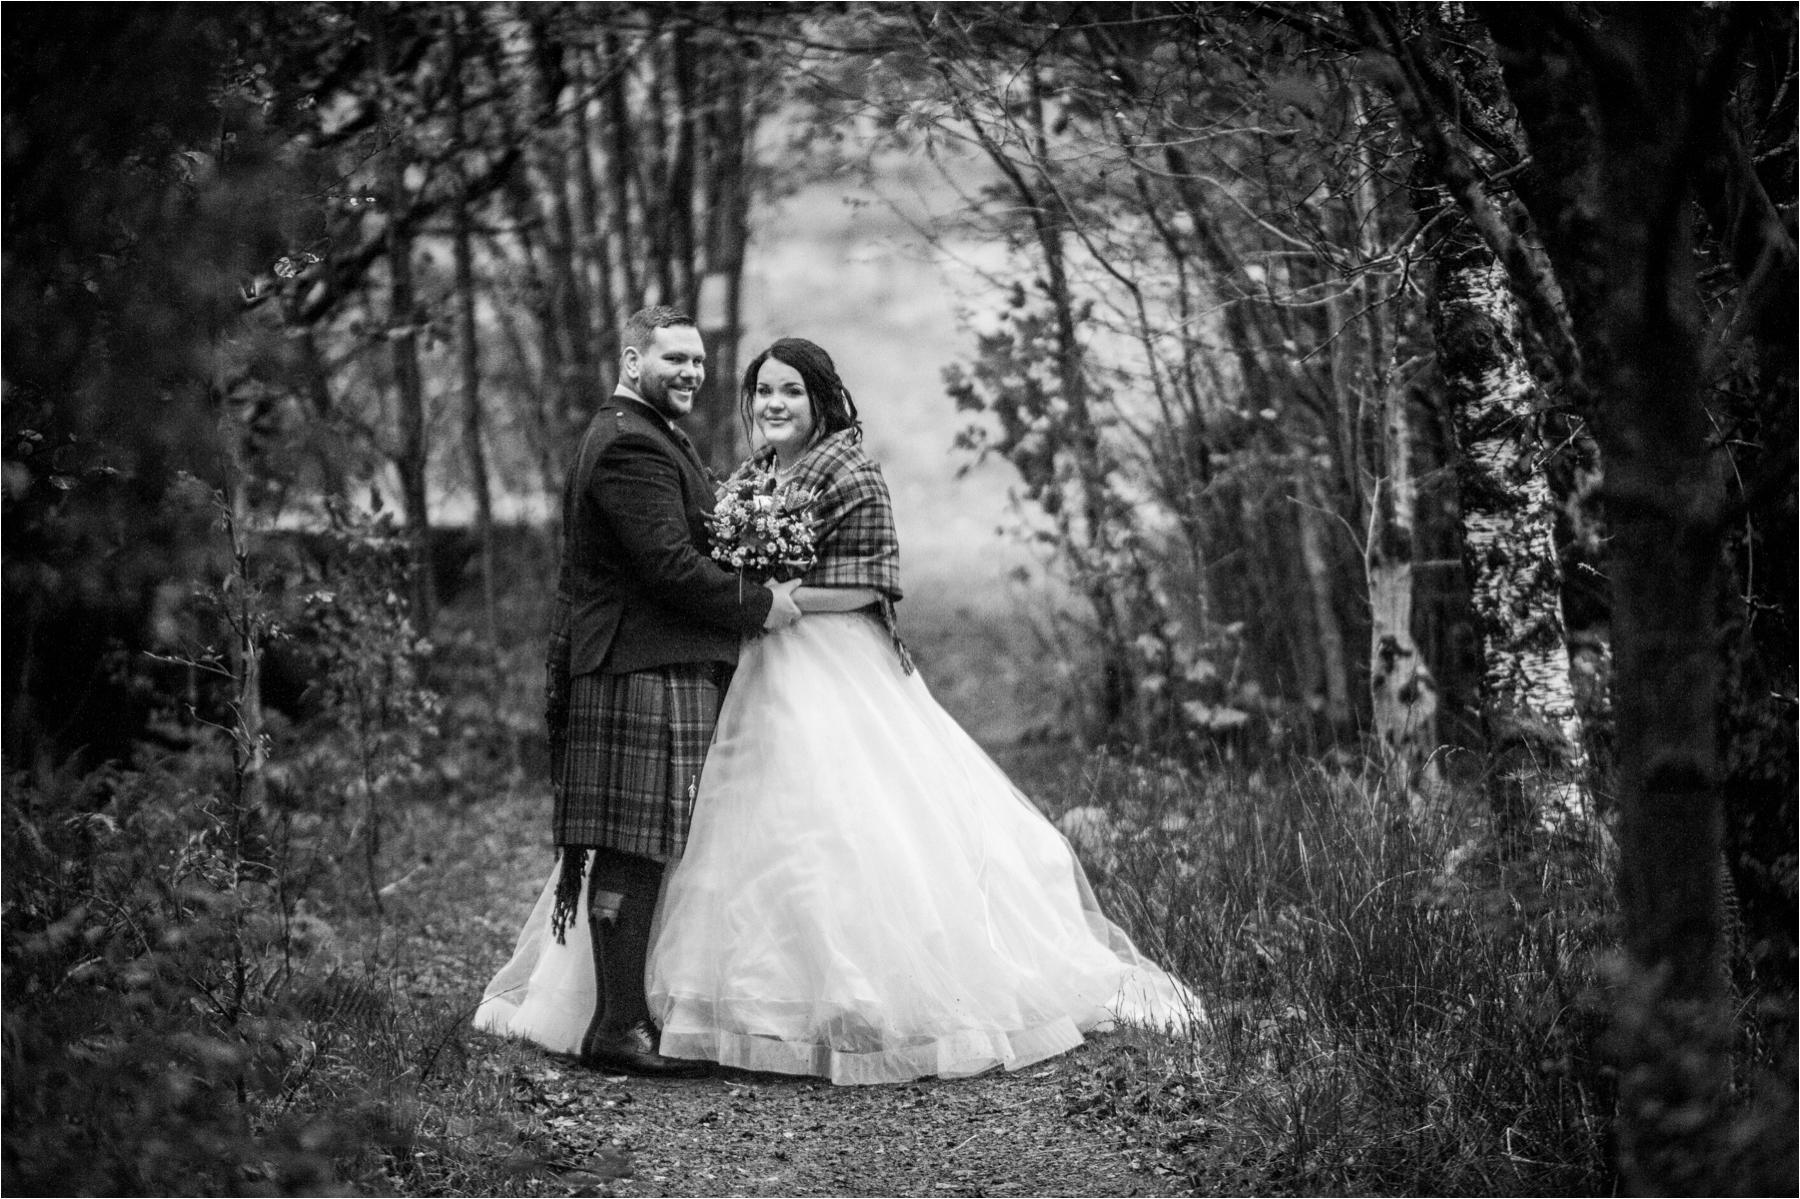 Small outdoor wedding in Glencoe